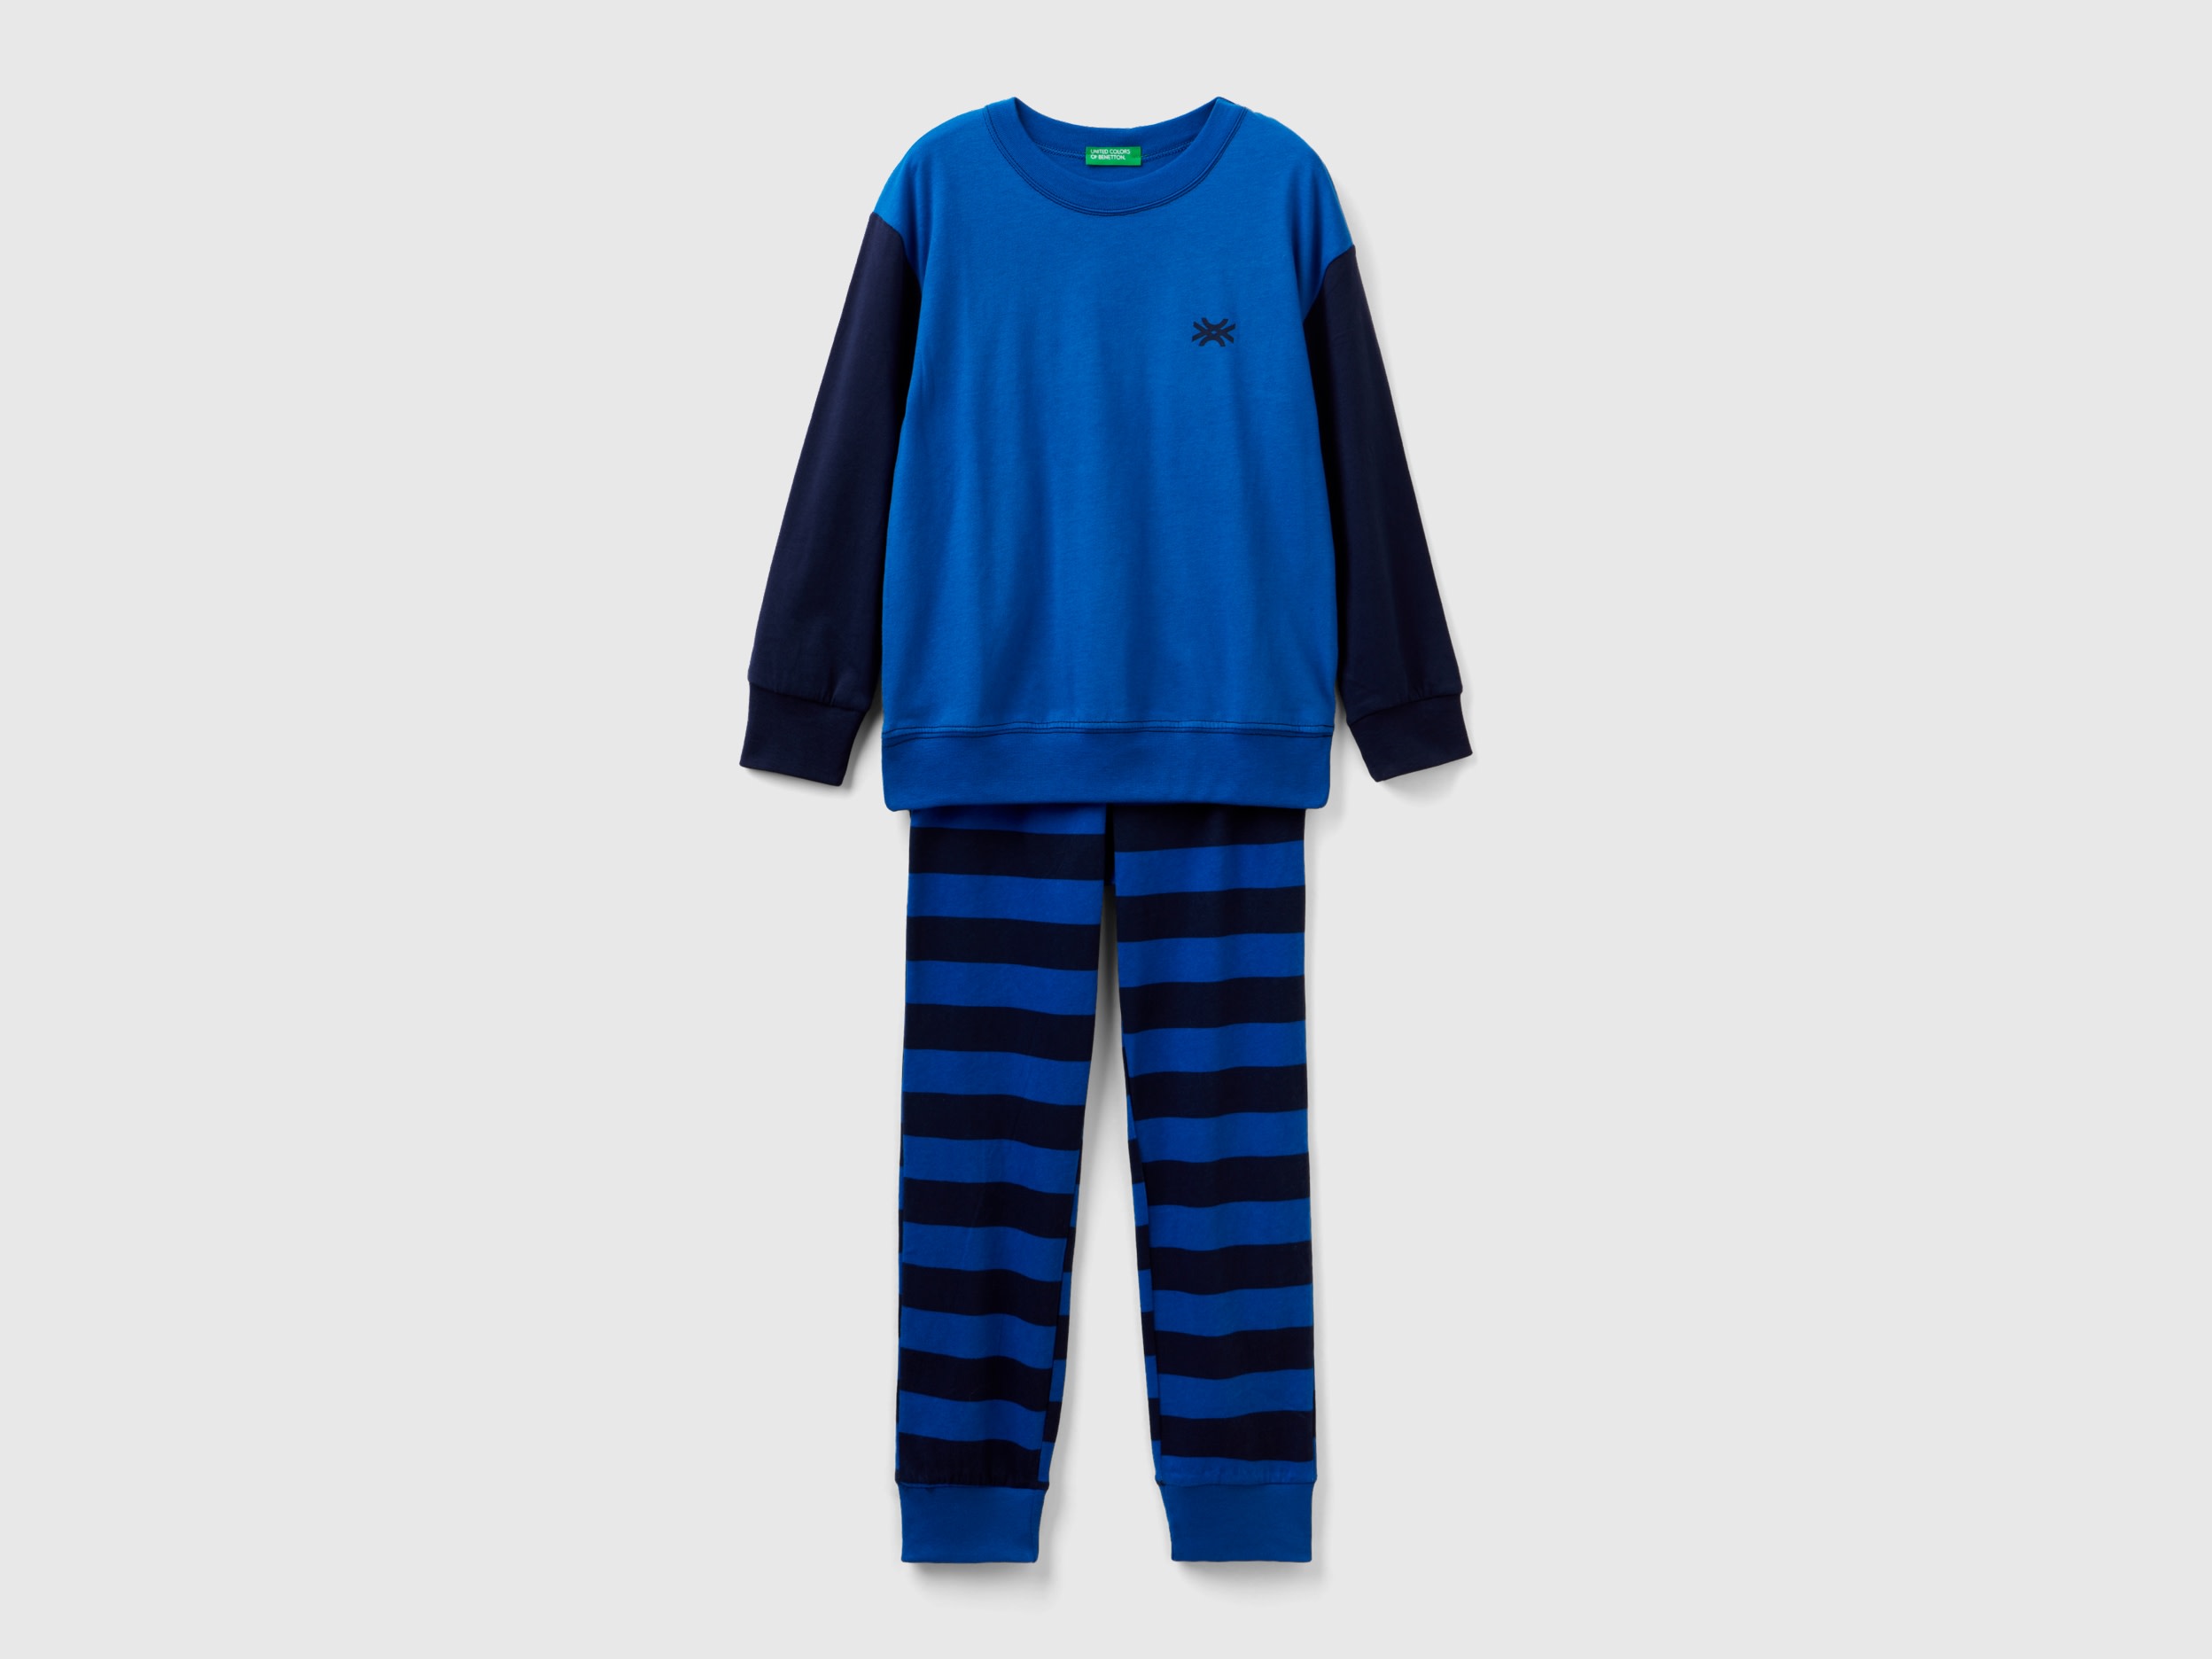 Benetton, Pyjamas With Camouflage Bottoms, size 2XL, Bright Blue, Kids